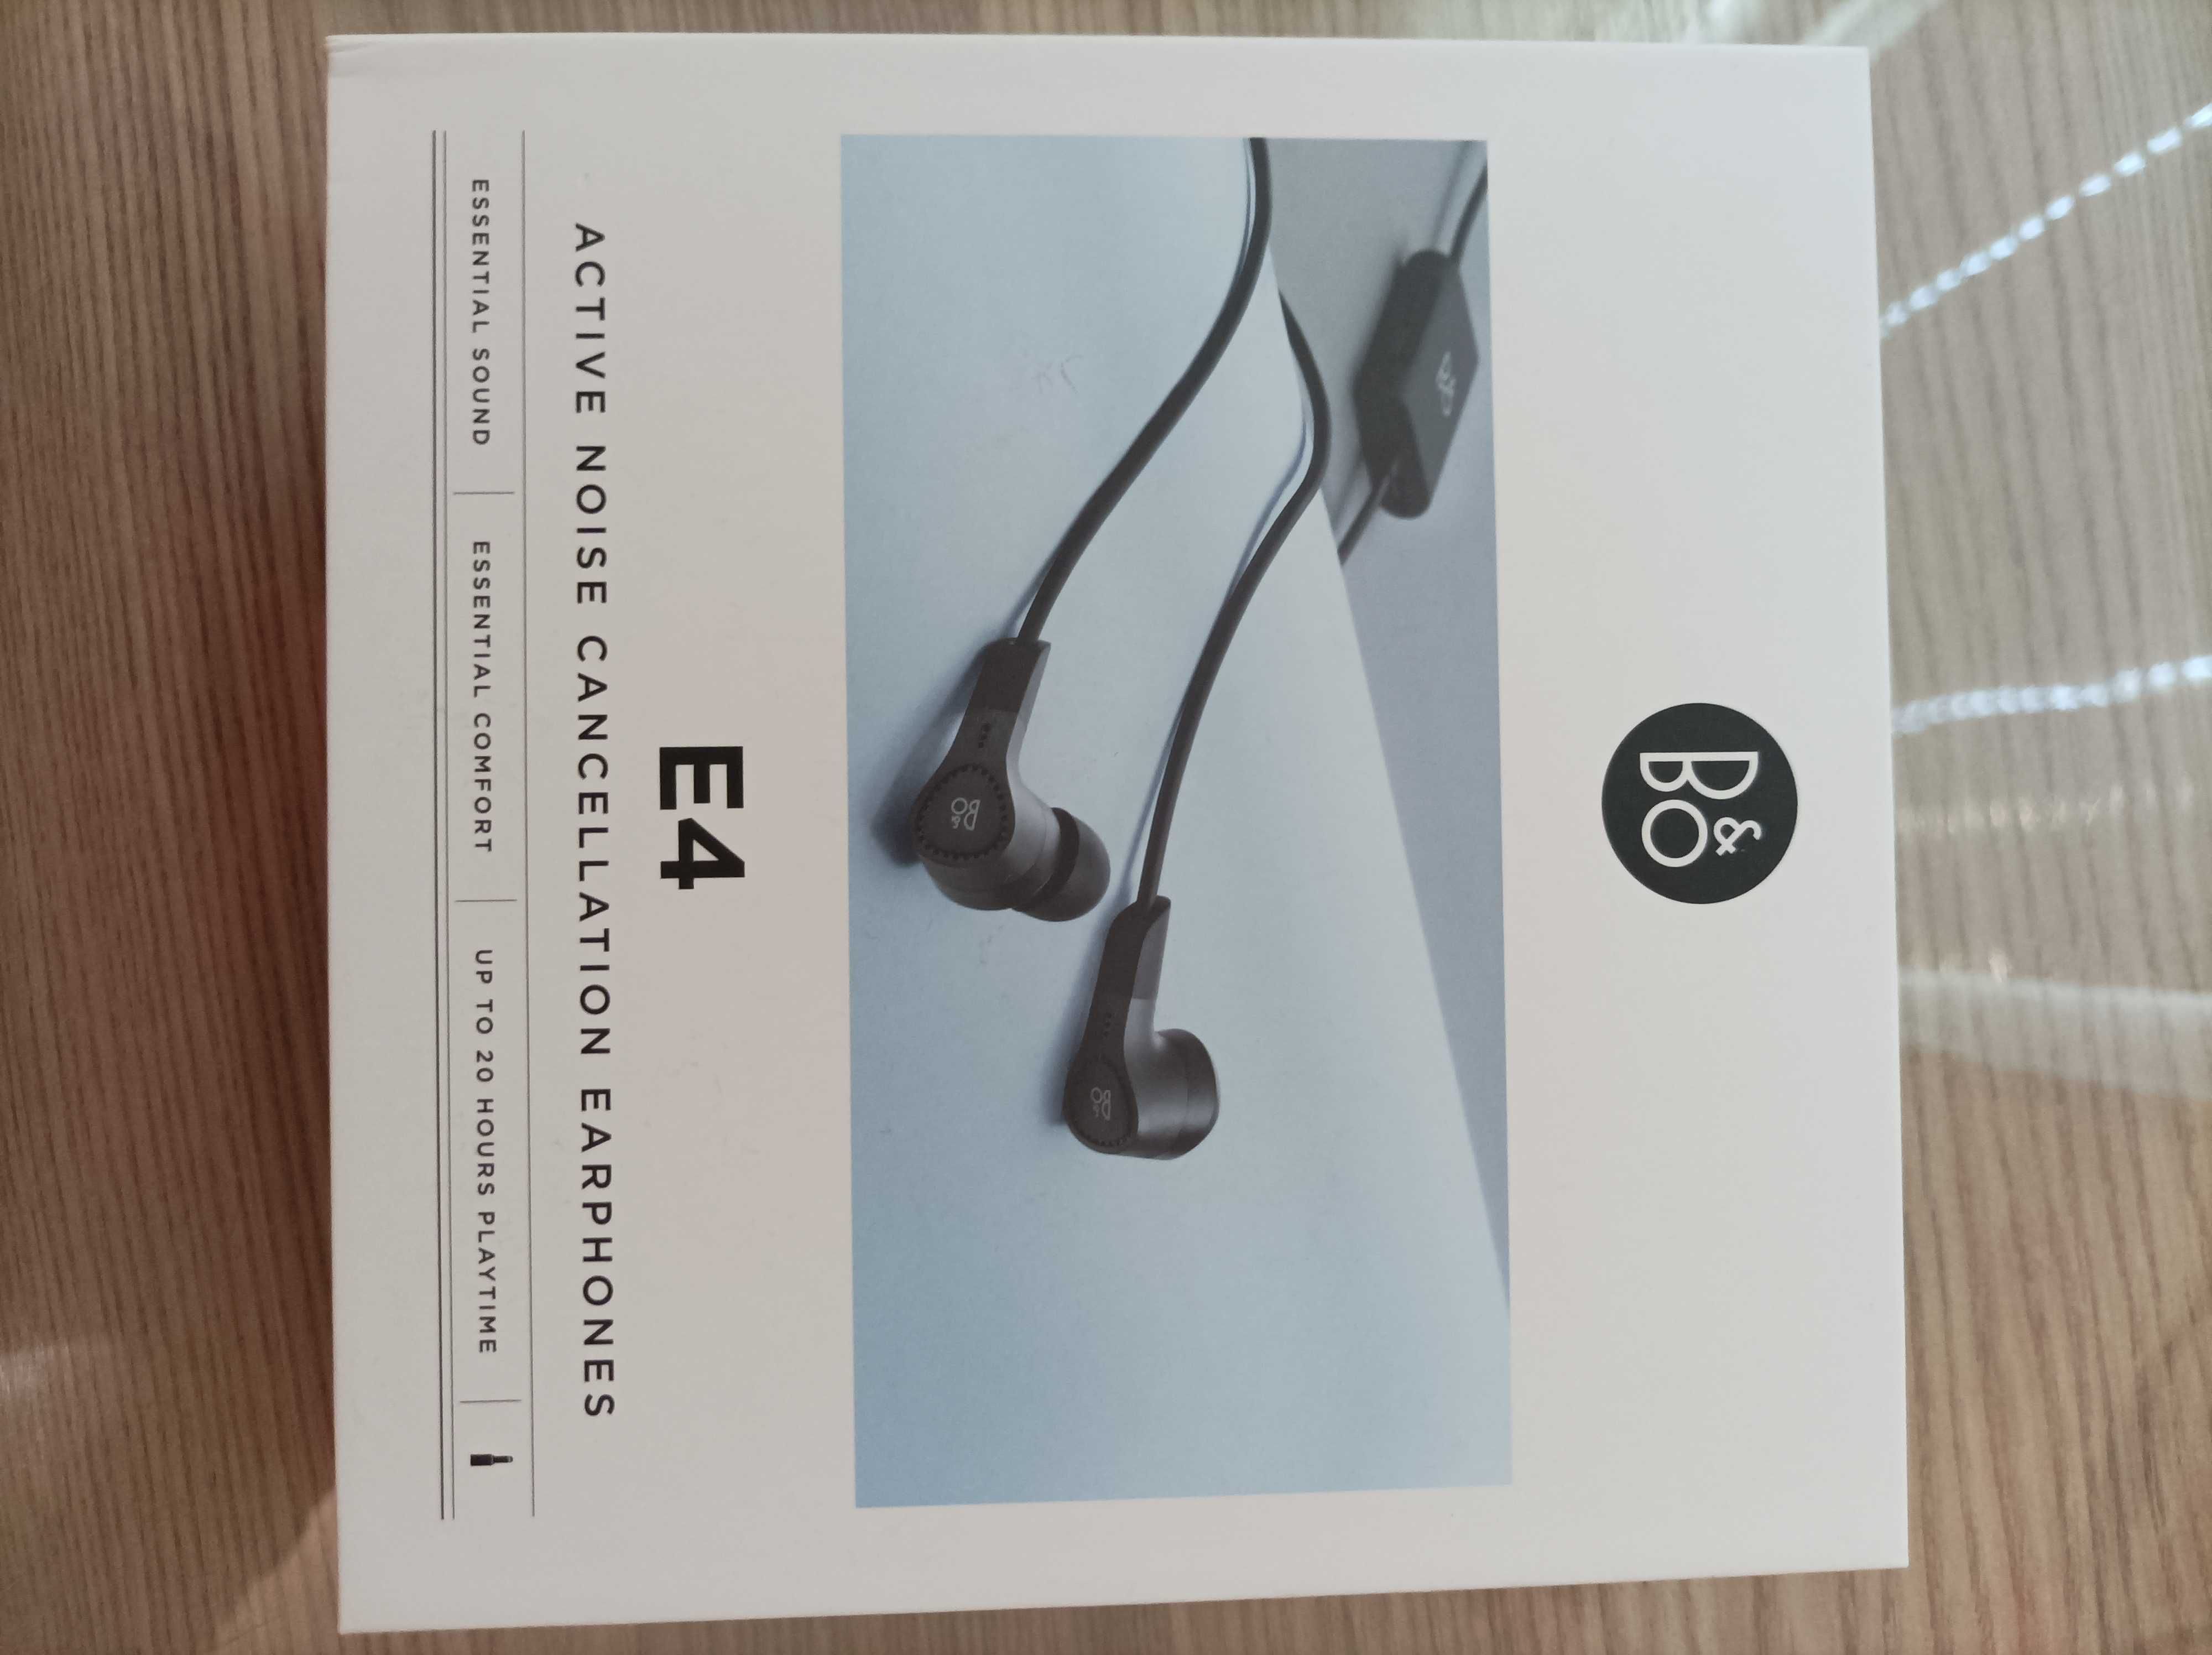 Bang & Olufsen E4 active noise cancellation earphones